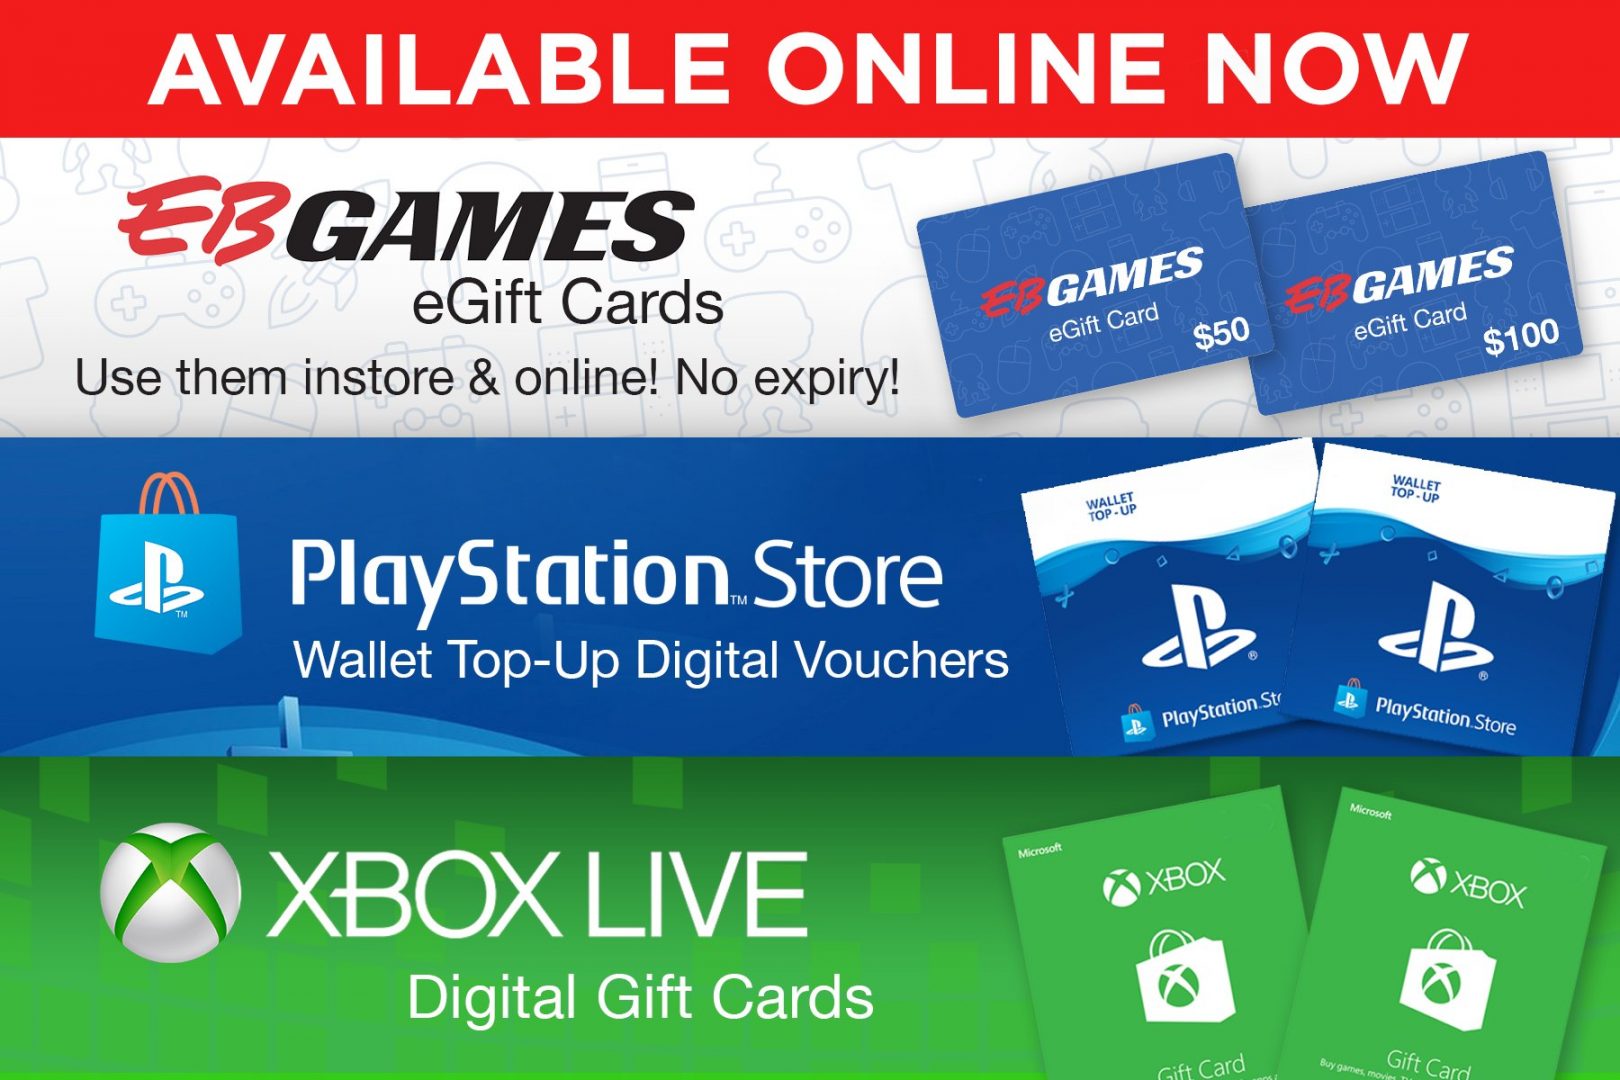 EB Games Gift Cards Have Gone Digital